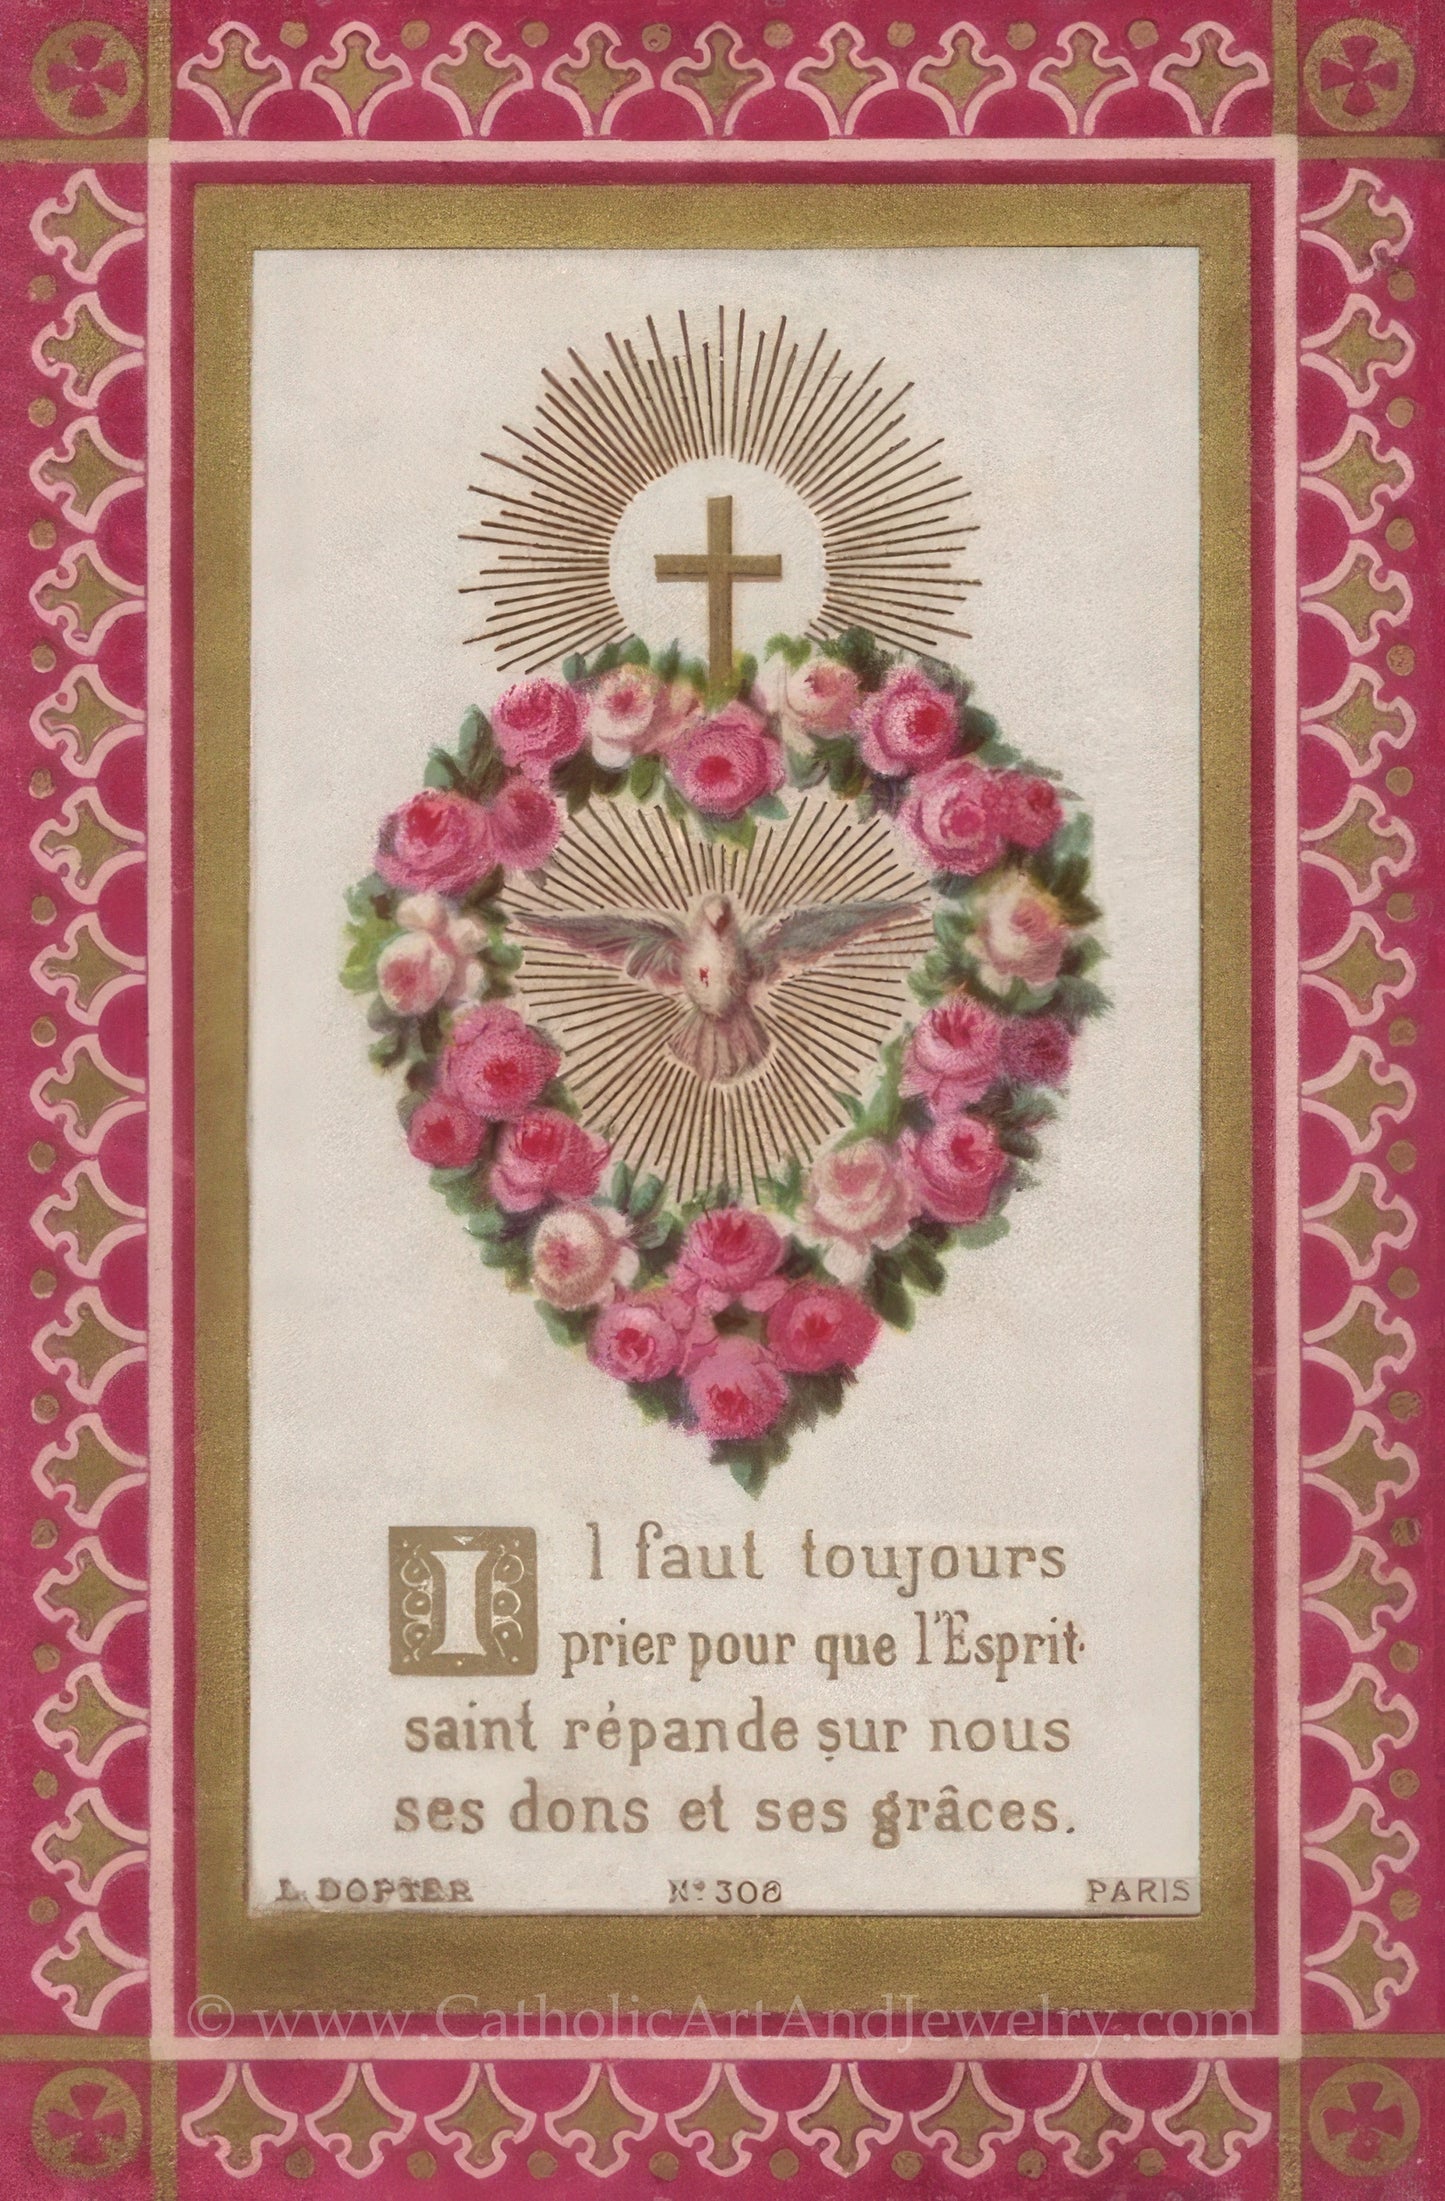 New! Catholic Valentine  – pack of 10/100/1000 – Restored Vintage Holy Card